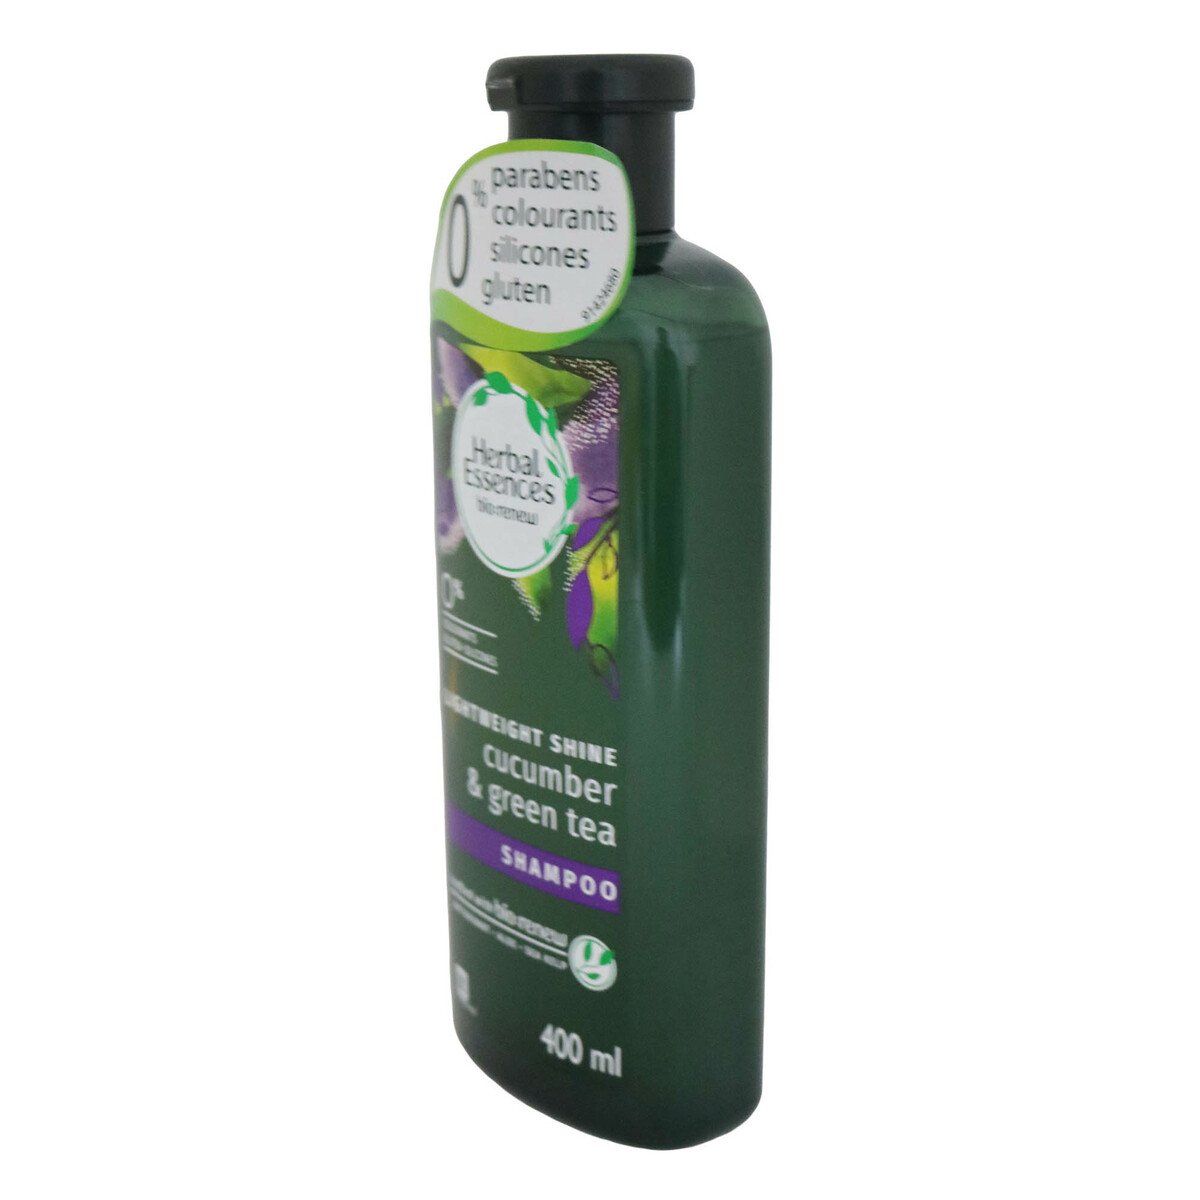 Herbal Essence Shampoo Cucumber & Green Tea 400ml